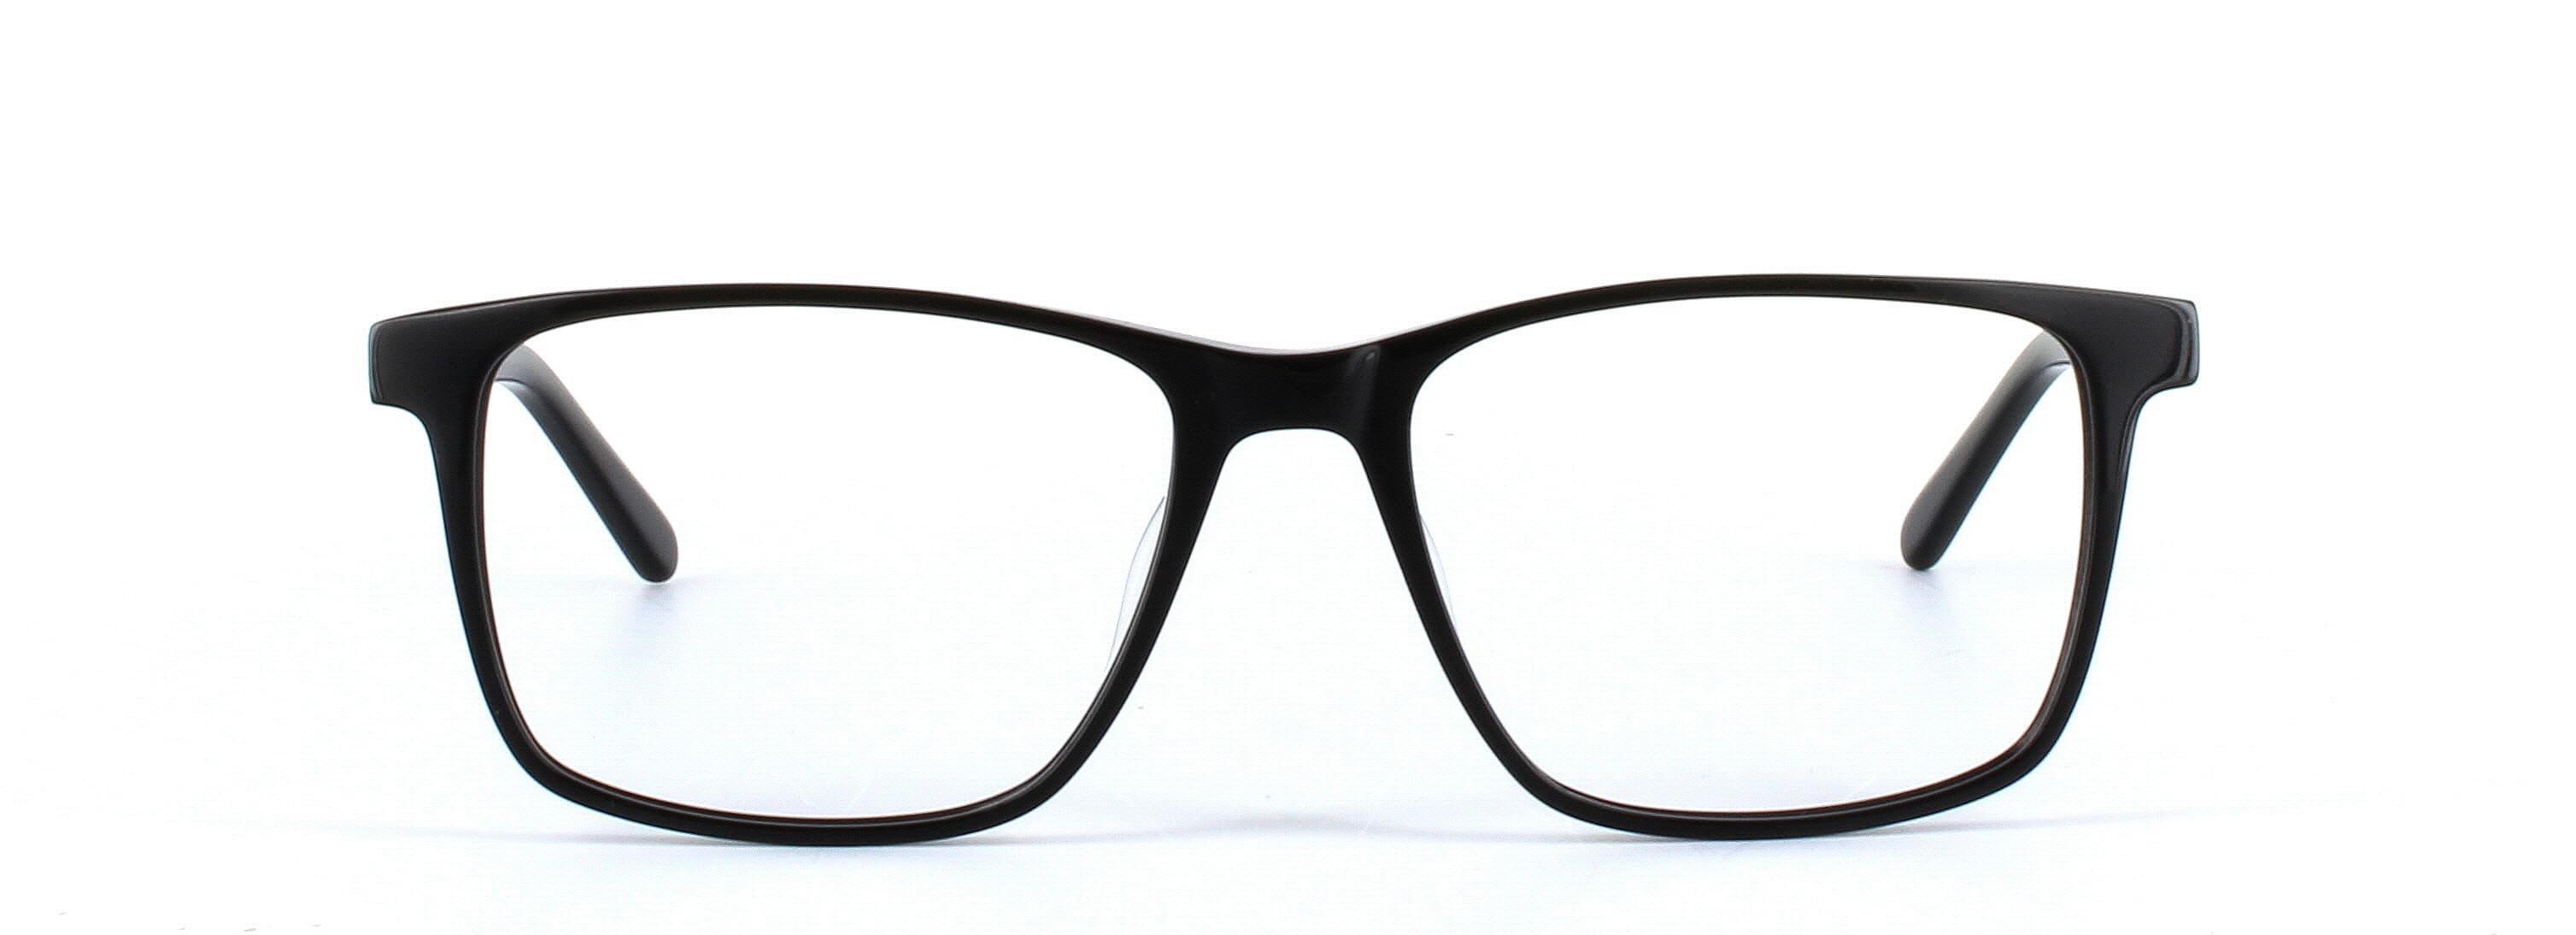 Bayley Lane Black Full Rim Rectangular Acetate Glasses - Image View 5